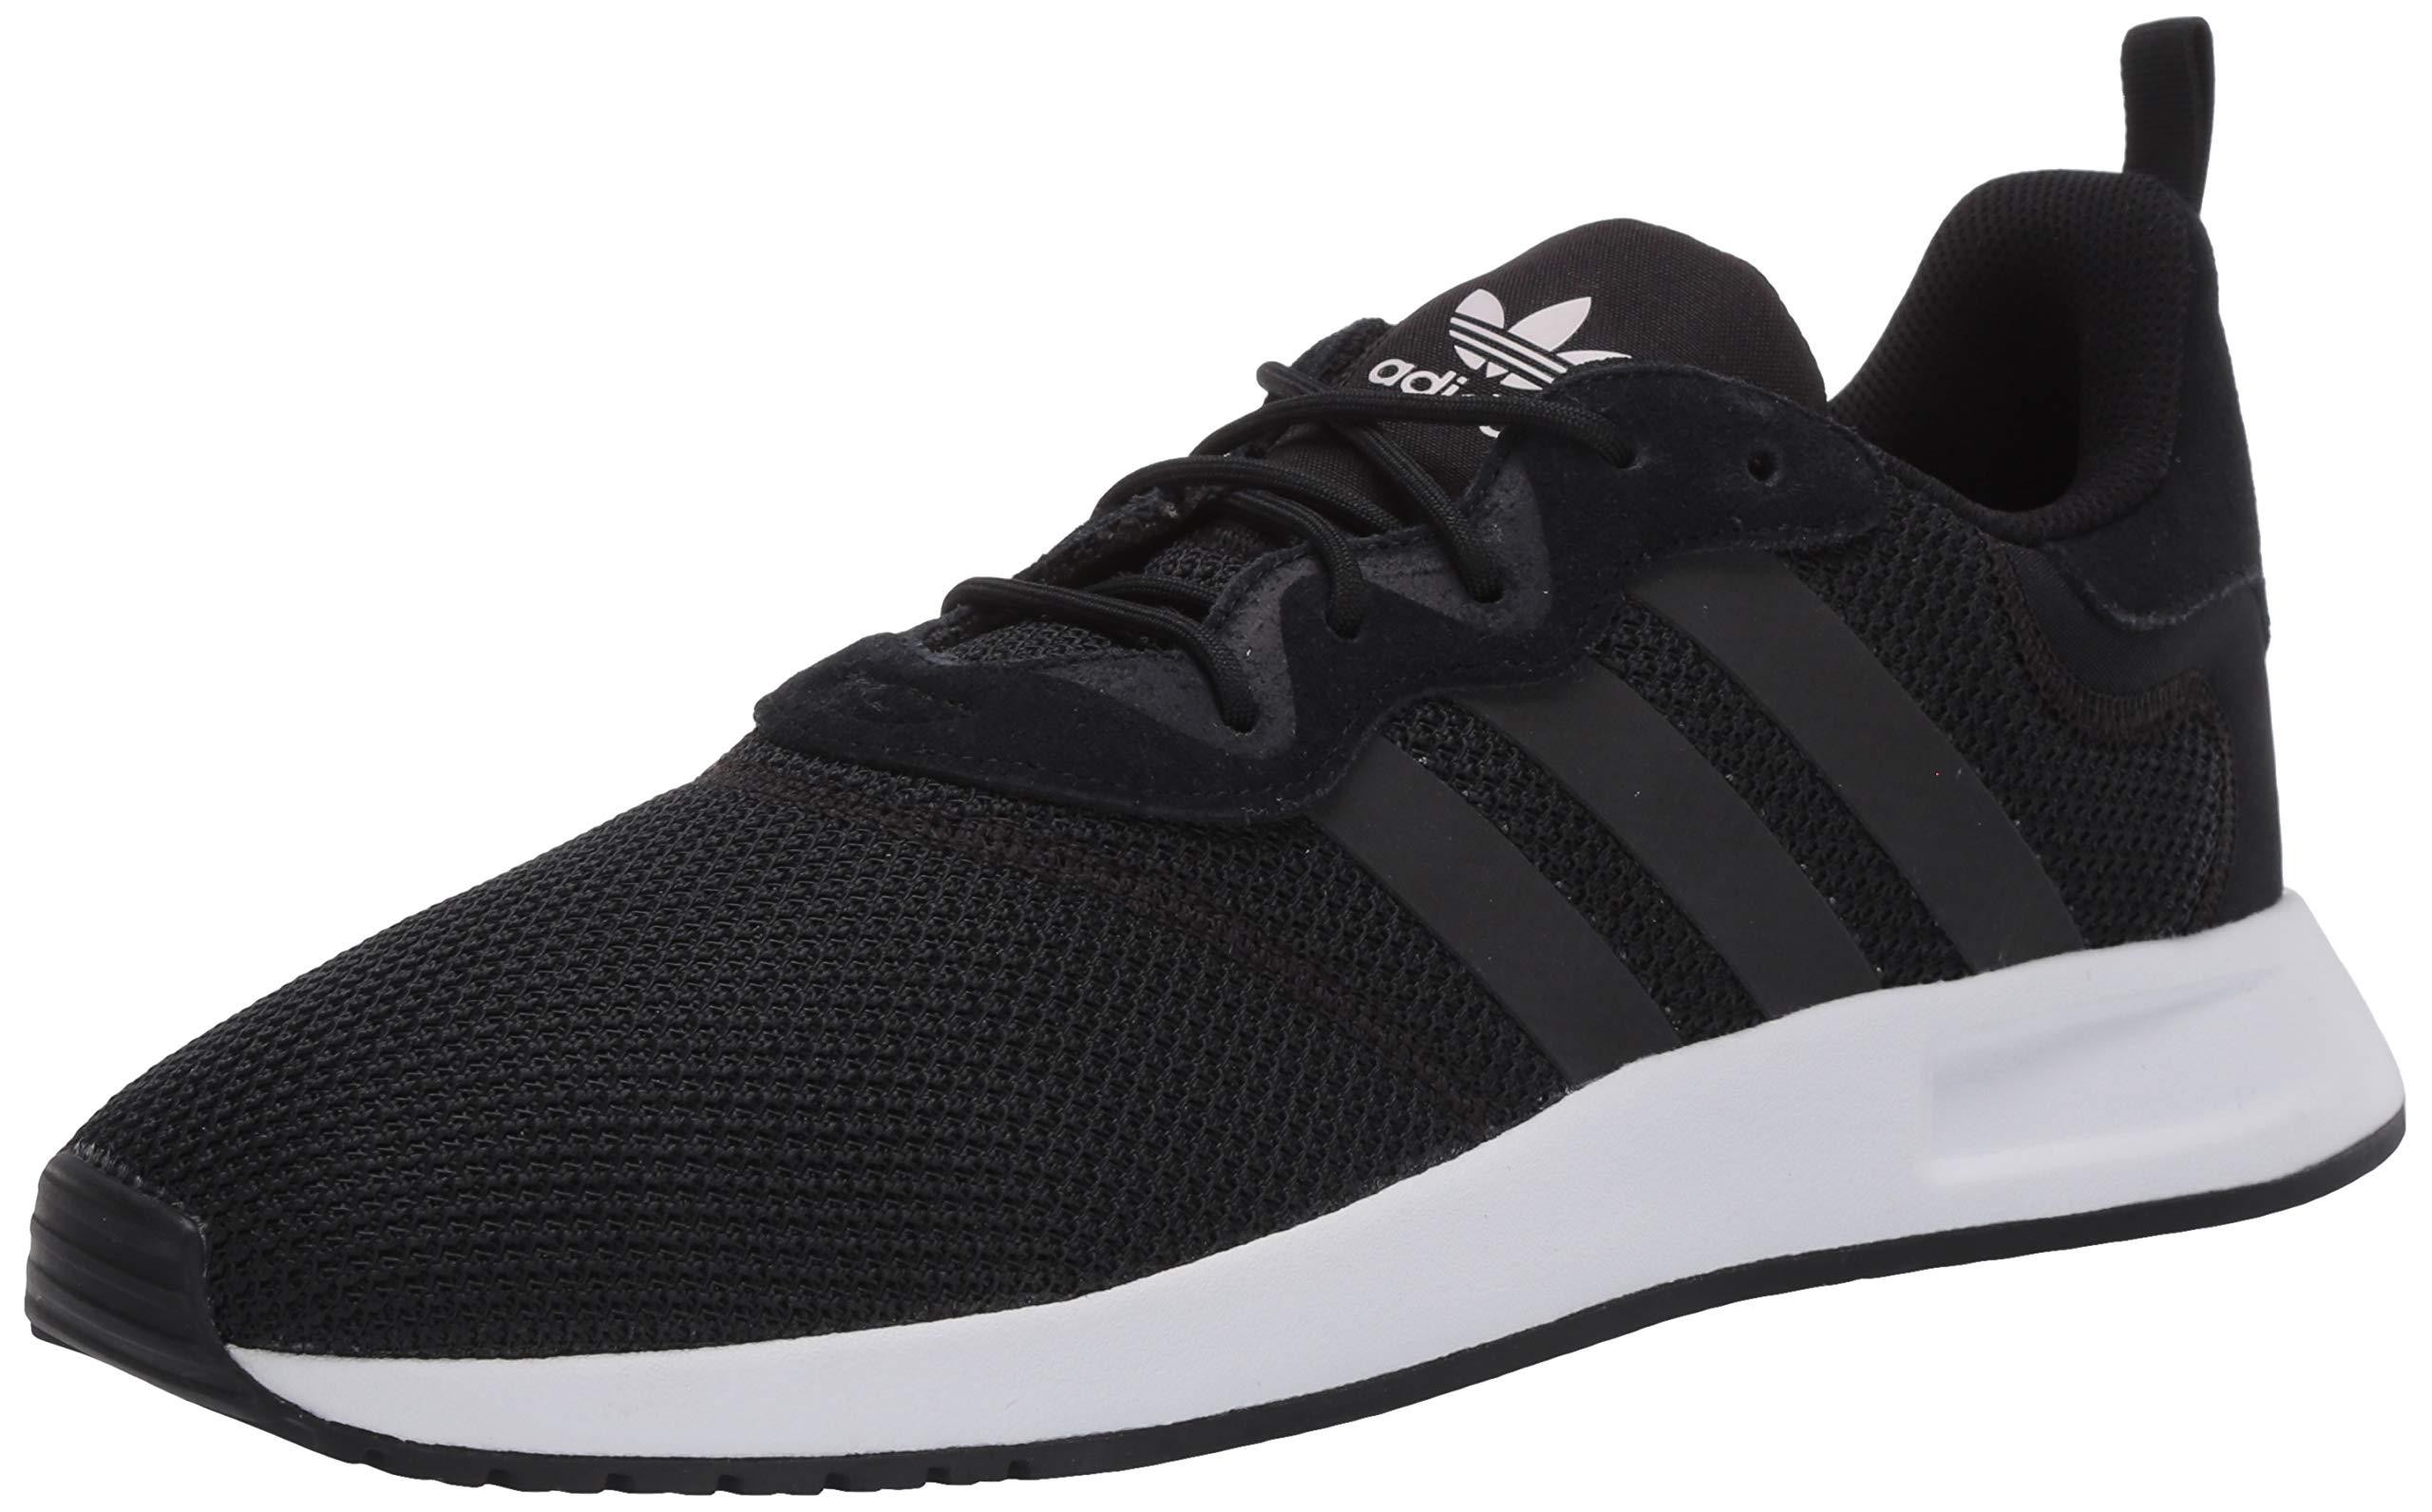 adidas Originals X_plr 2 Sneaker in Black/Black/White (Black) for Men - Lyst